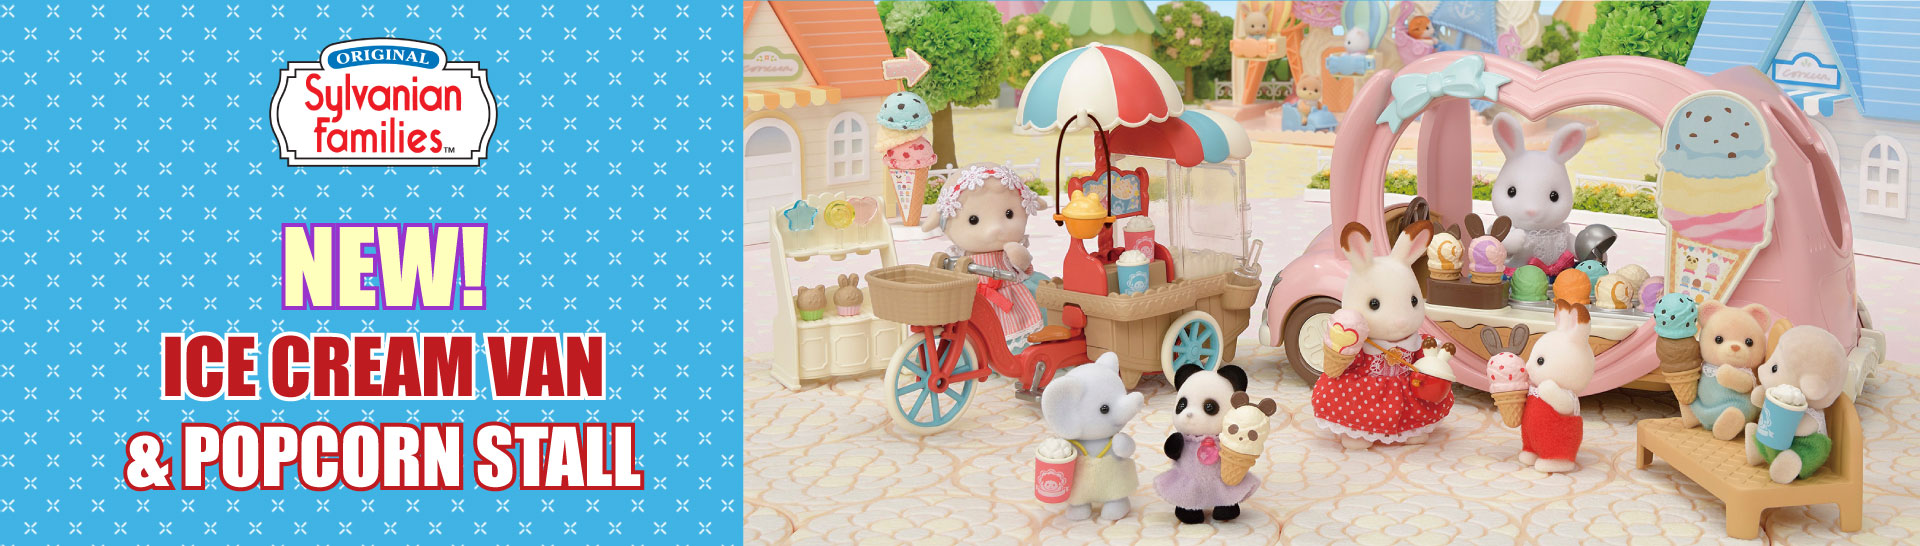 New Ice Cream Van & Popcorn Cart!